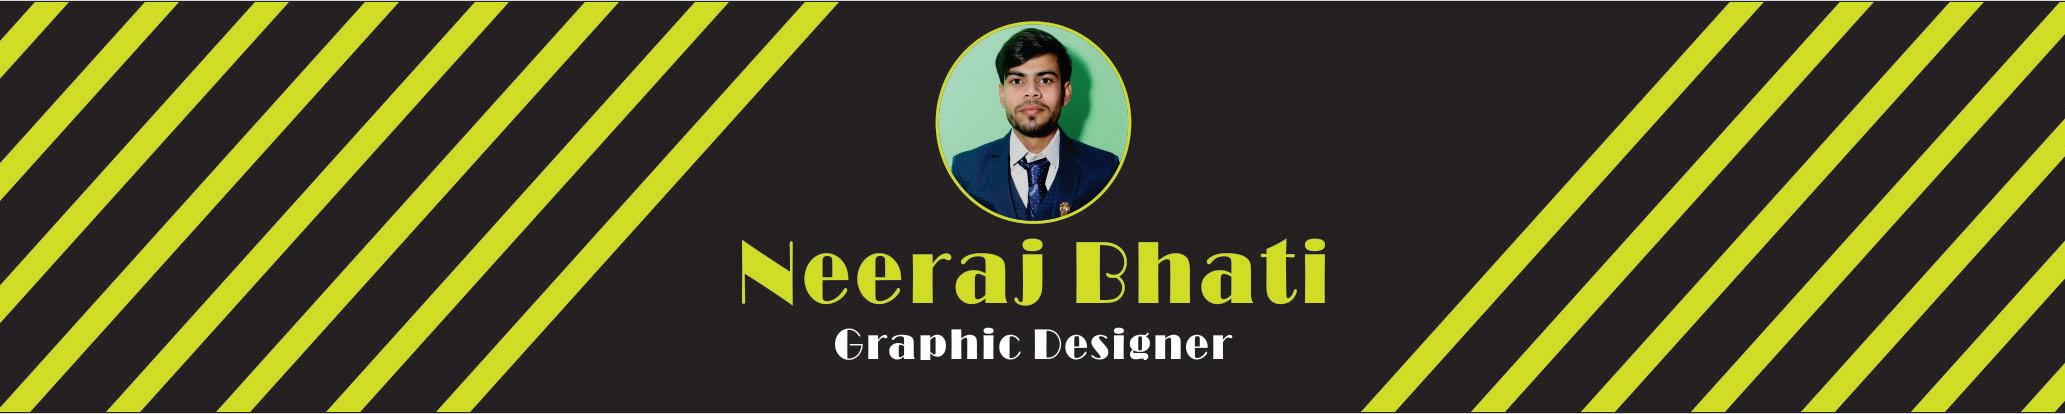 Banner de perfil de Neeraj Bhati